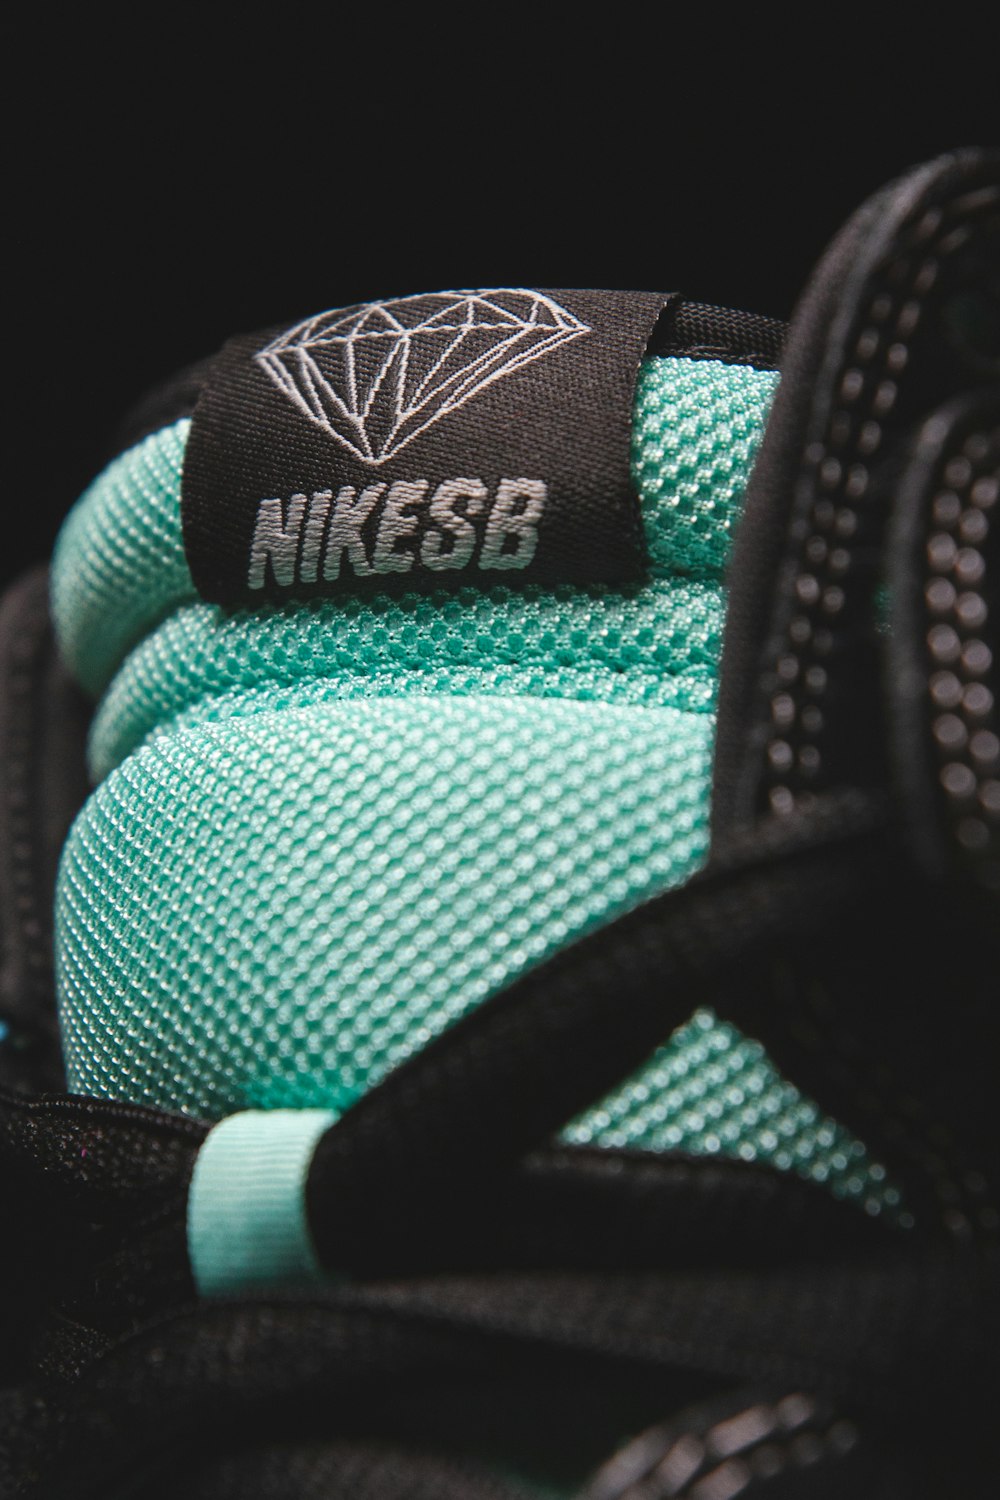 Nike Sb Pictures | Download Free Images on Unsplash